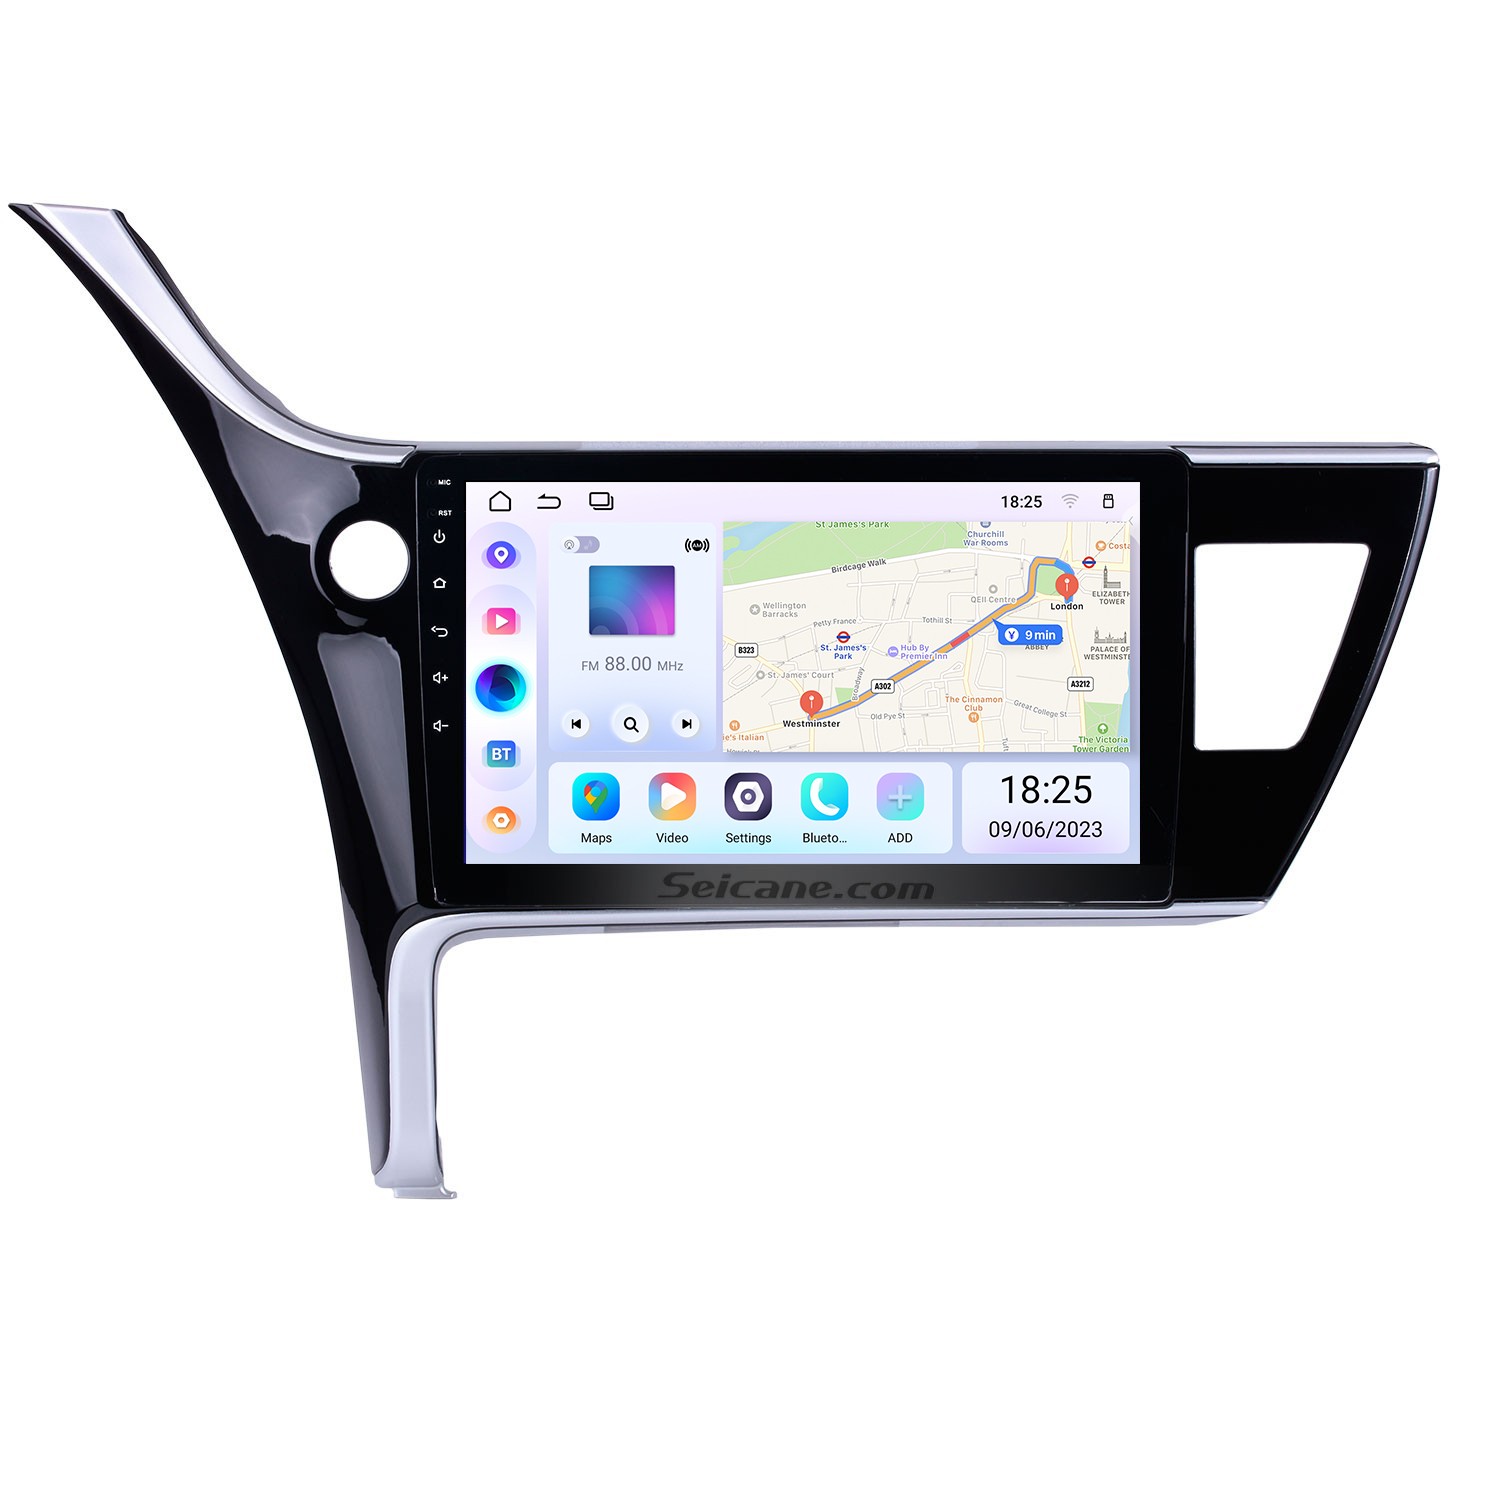 Aftermarket Radio for 11 Bluetooth Auris 2018 Carplay E170 E180 GPS Altis Touchscreen Radio System Navigation Corolla Toyota 2019 2017